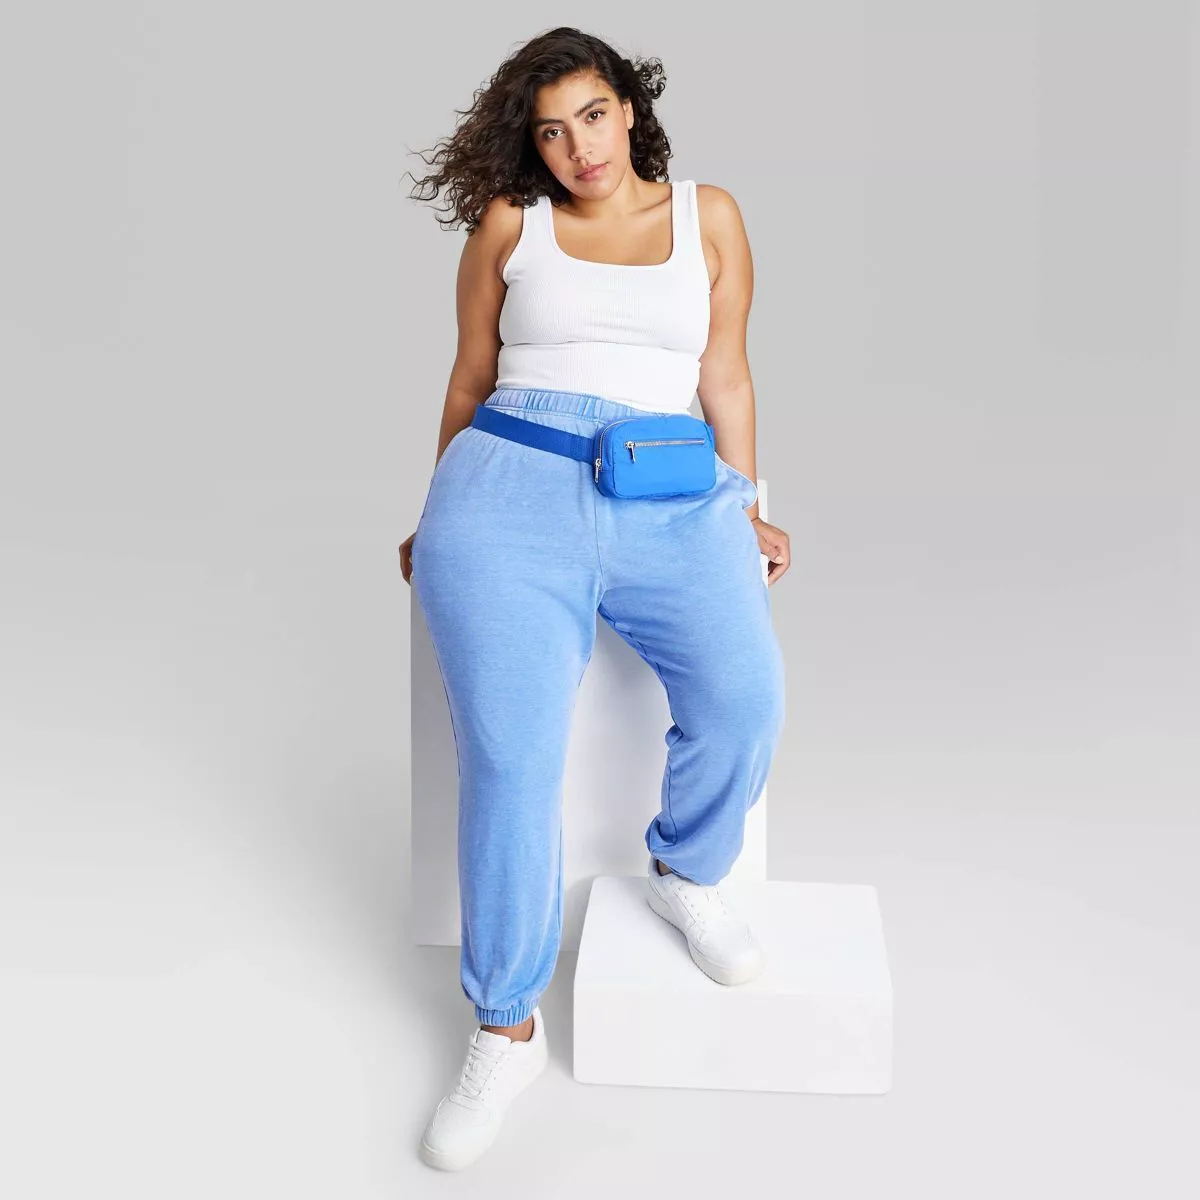 Women's Plus Size High-Rise Fleece Sweatpants - Wild Fable Navy Blue 4X